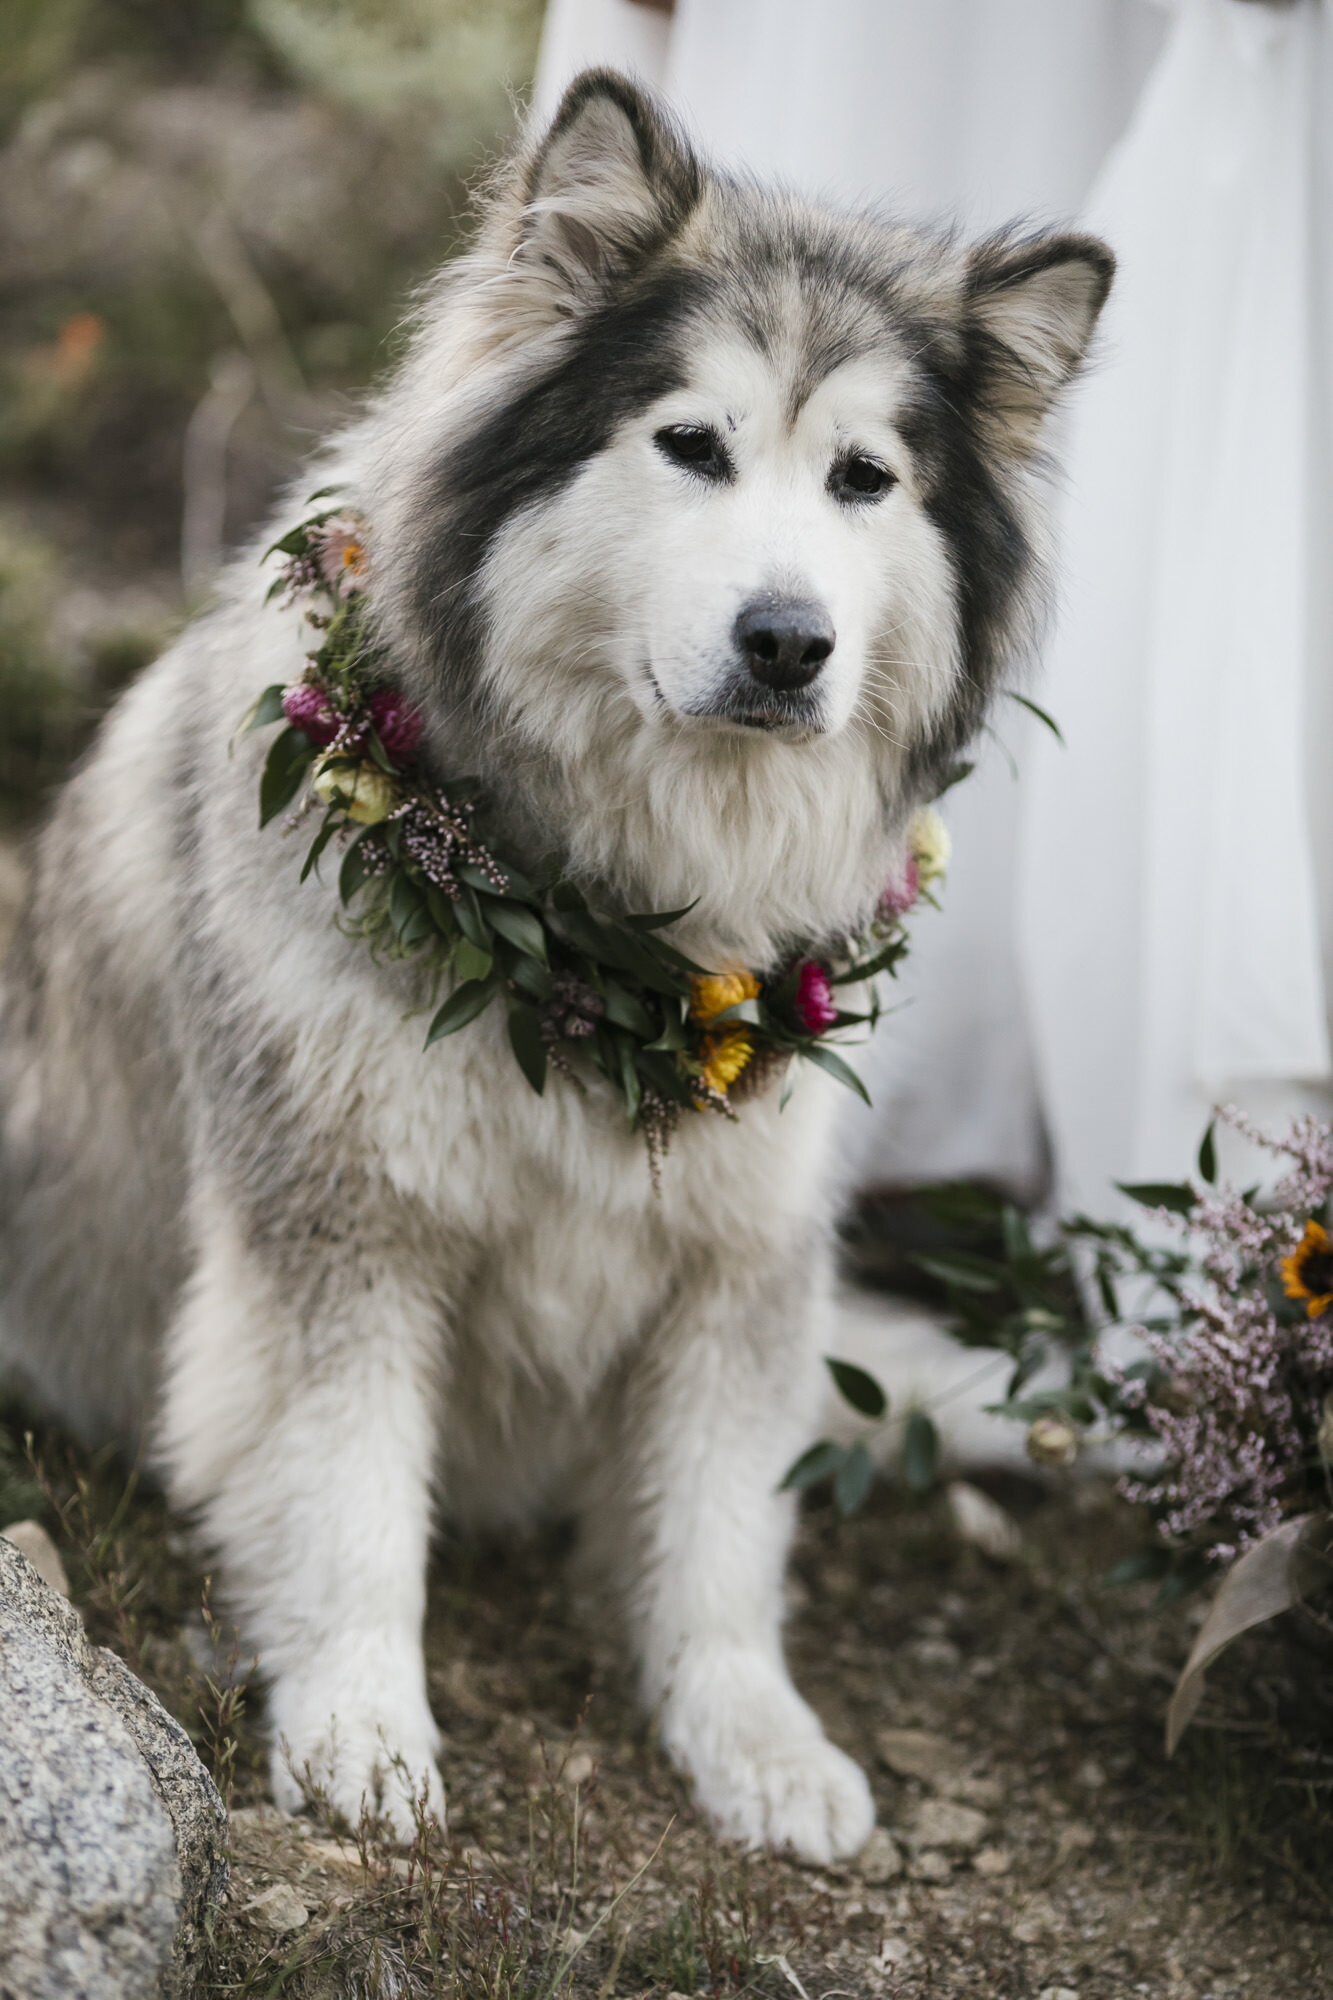 Alaskan Malamute "flower girl" dog shows off her flower collar